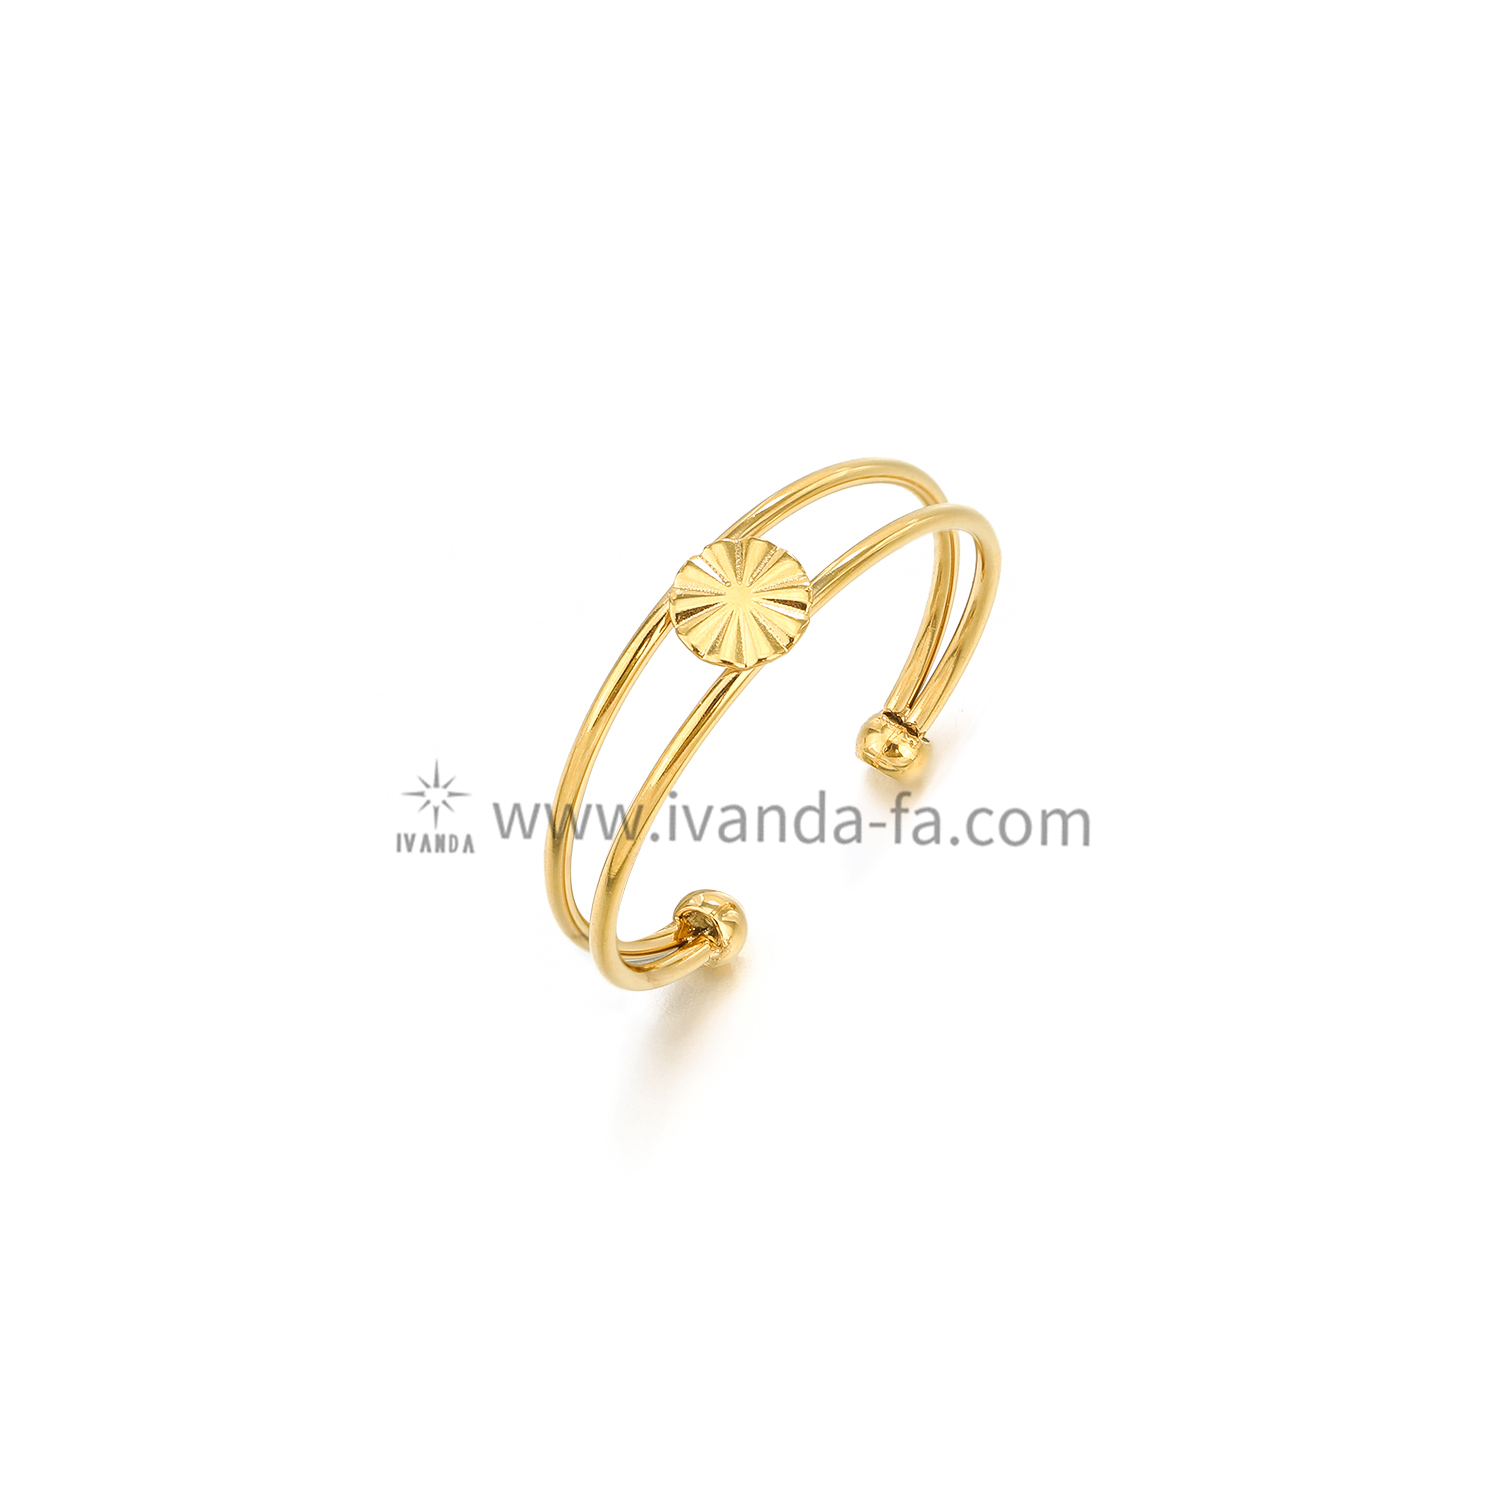 Buy Wholesale China New Gold Bracelet Latest Designs 24 K Bracelet Bangles  Gold Plated, Gold Jewelry Wholesale & Fashion Jewelry Gold Plated at USD  1.35